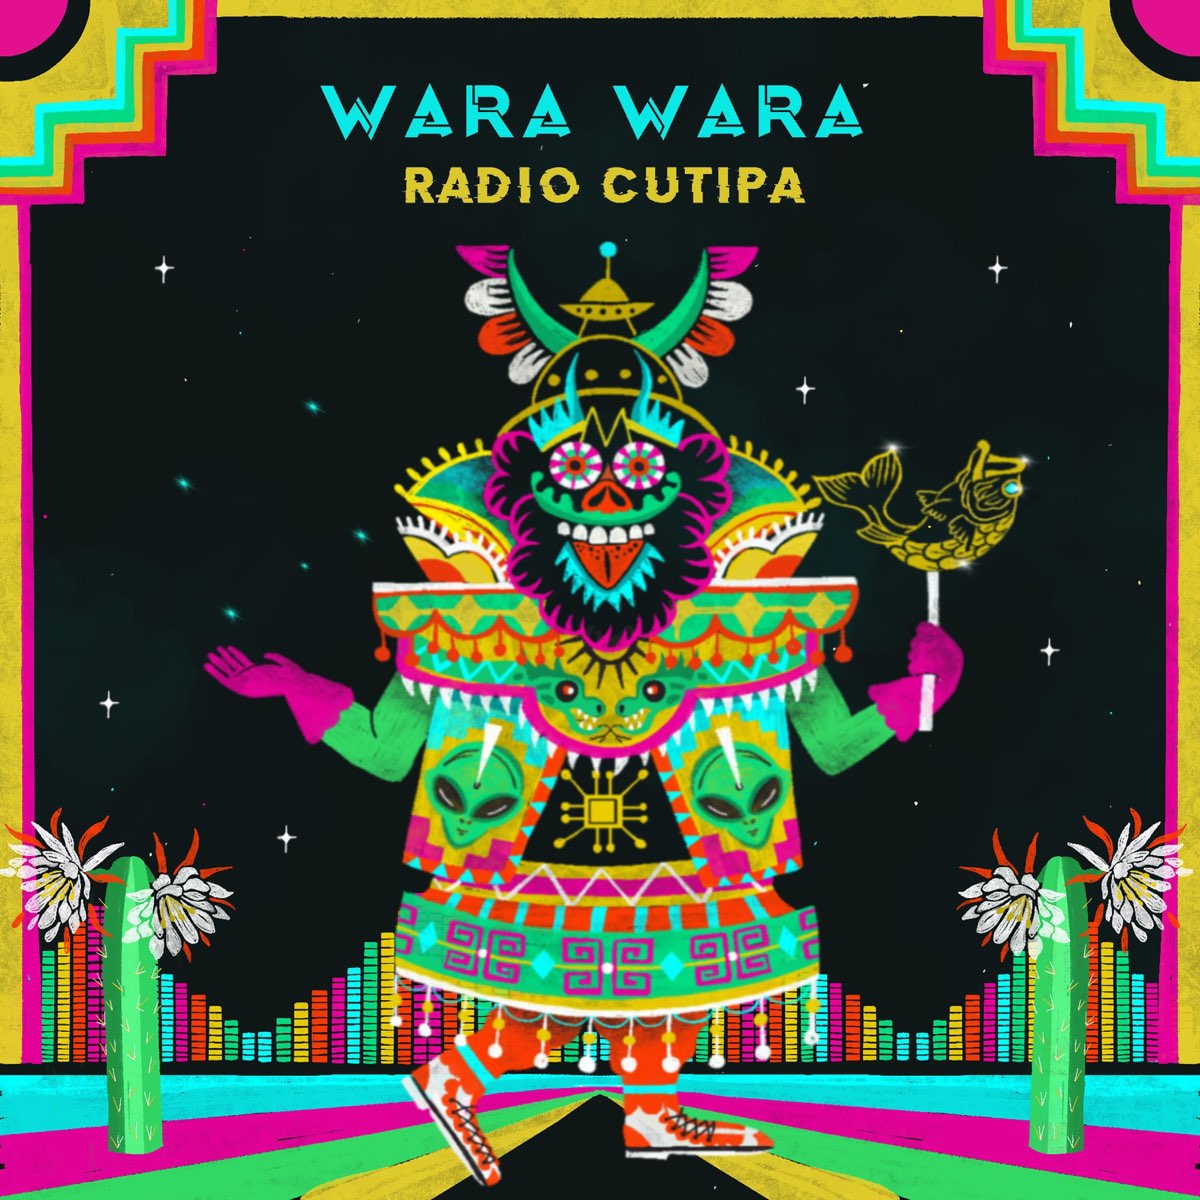 Wara Wara - Single - Album by Radio Cutipa - Apple Music